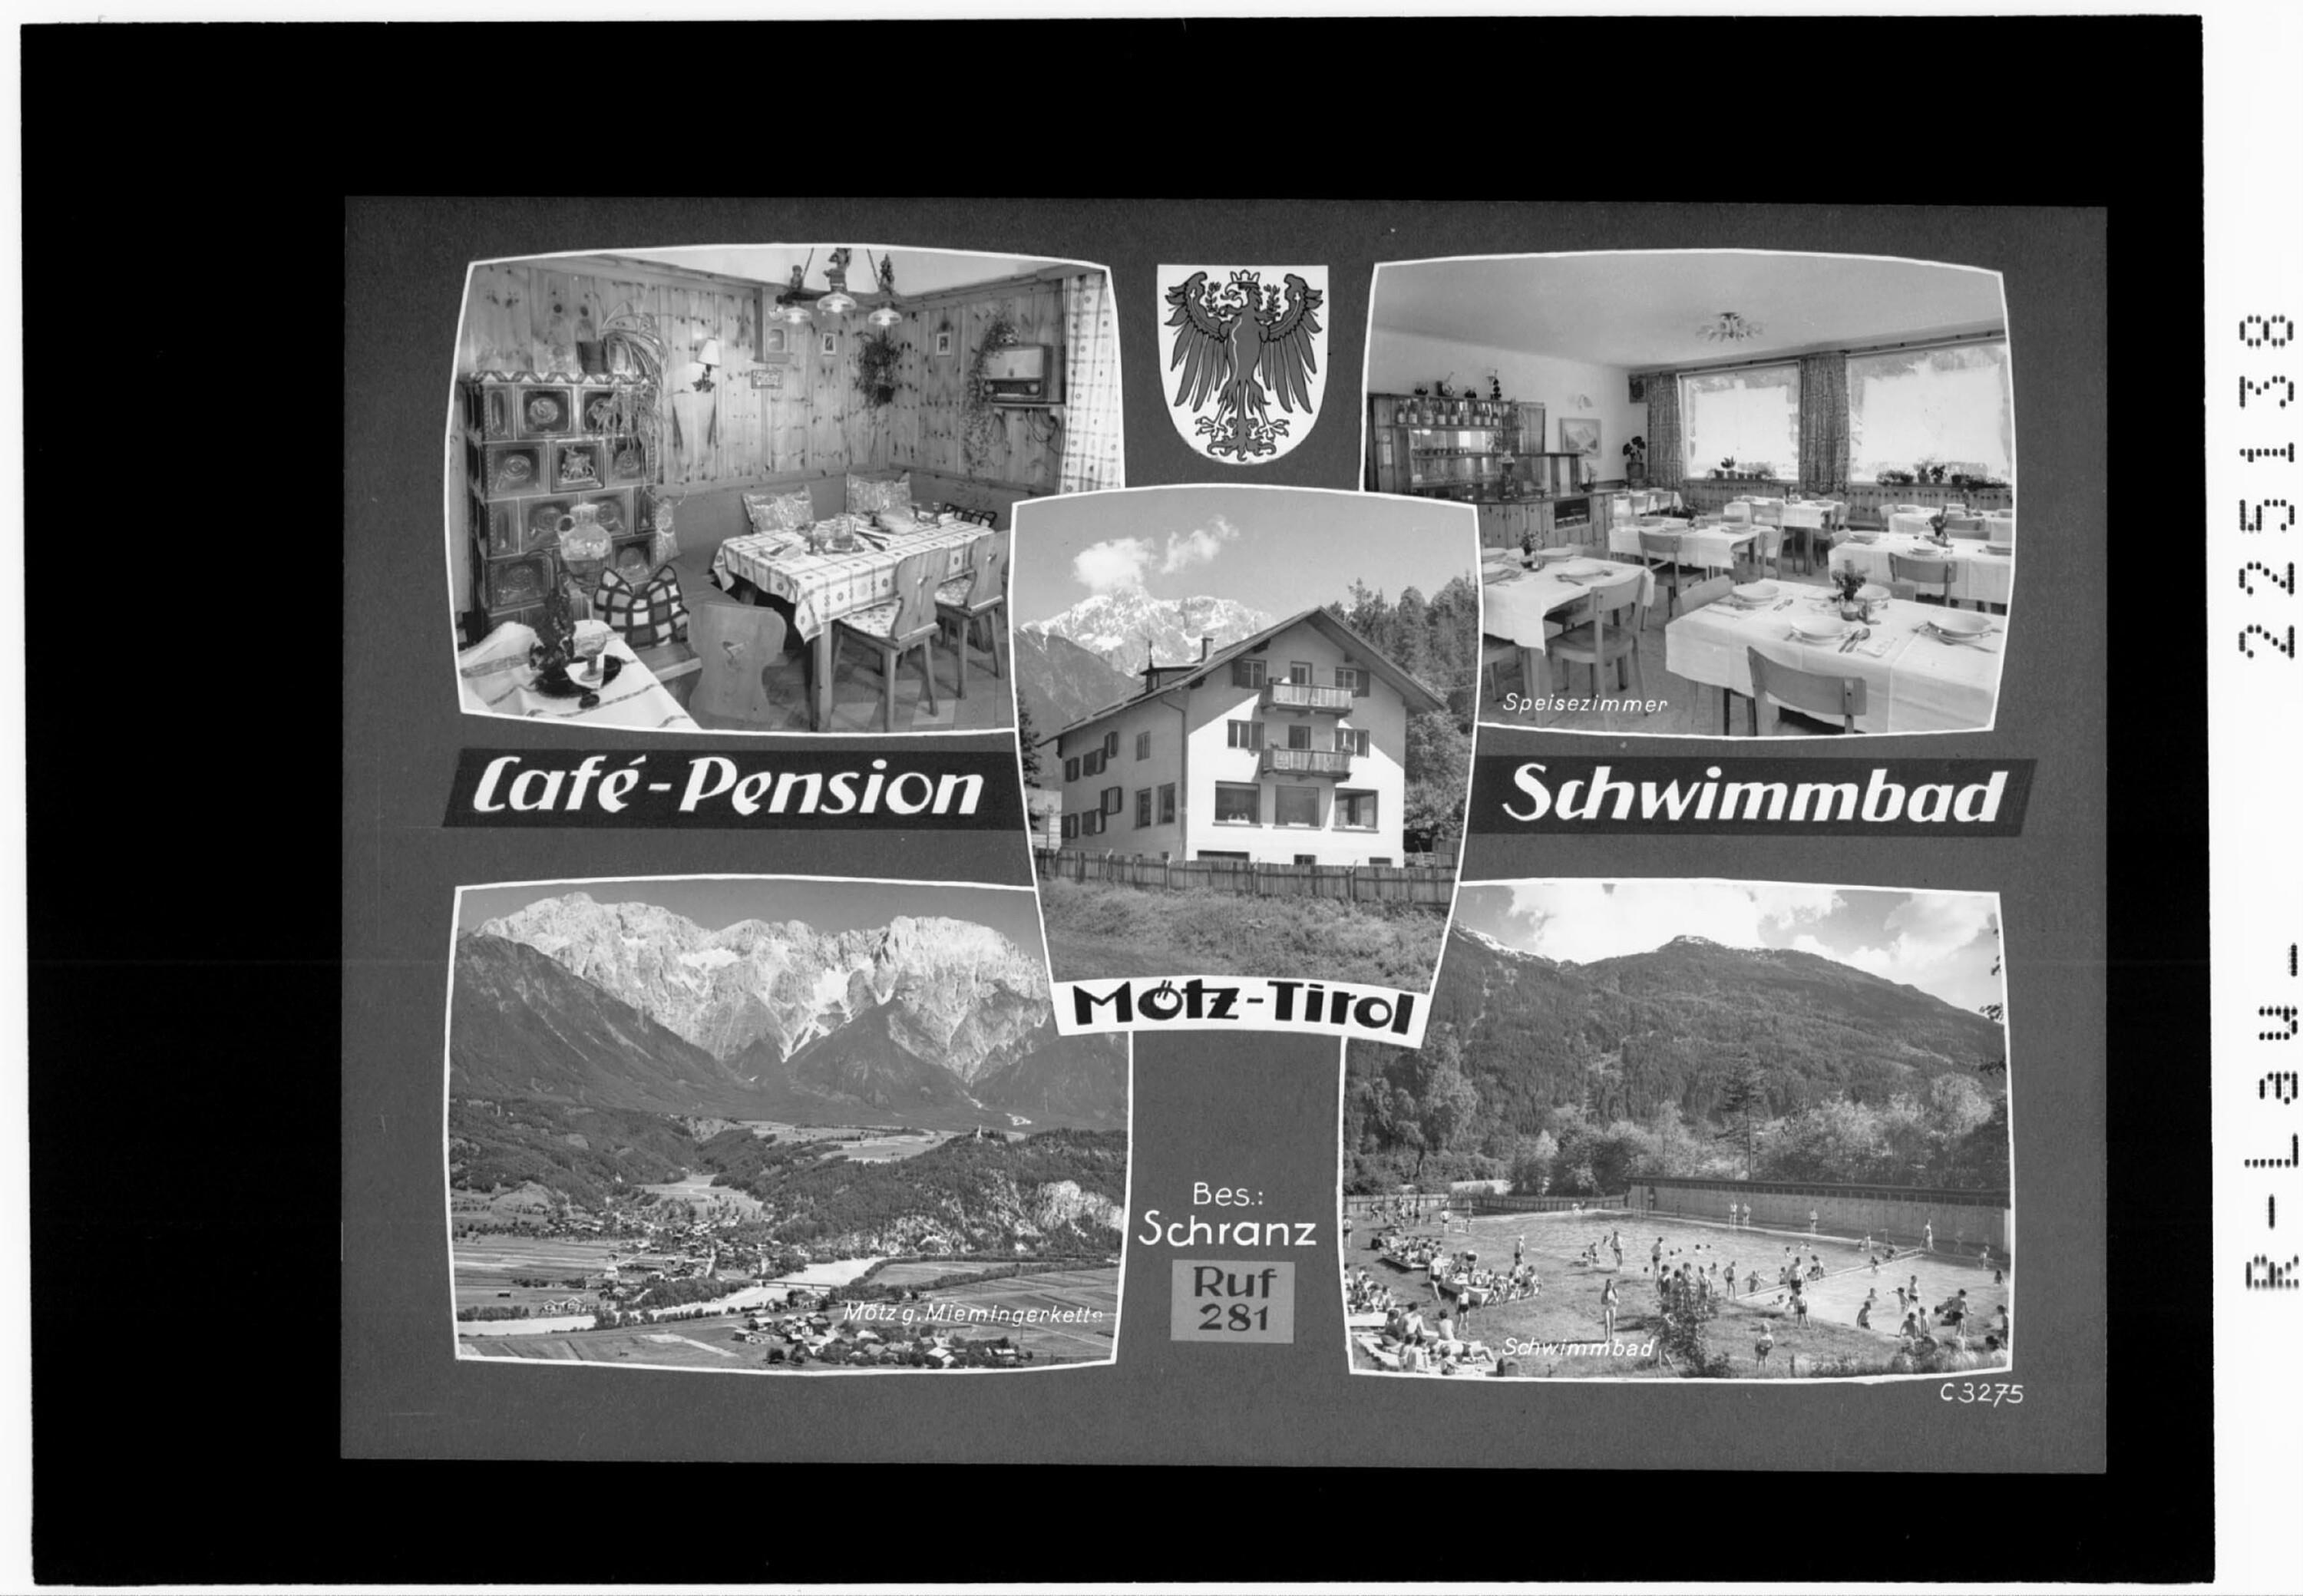 Cafe Pension / Schwimmbad / Mötz - Tirol></div>


    <hr>
    <div class=